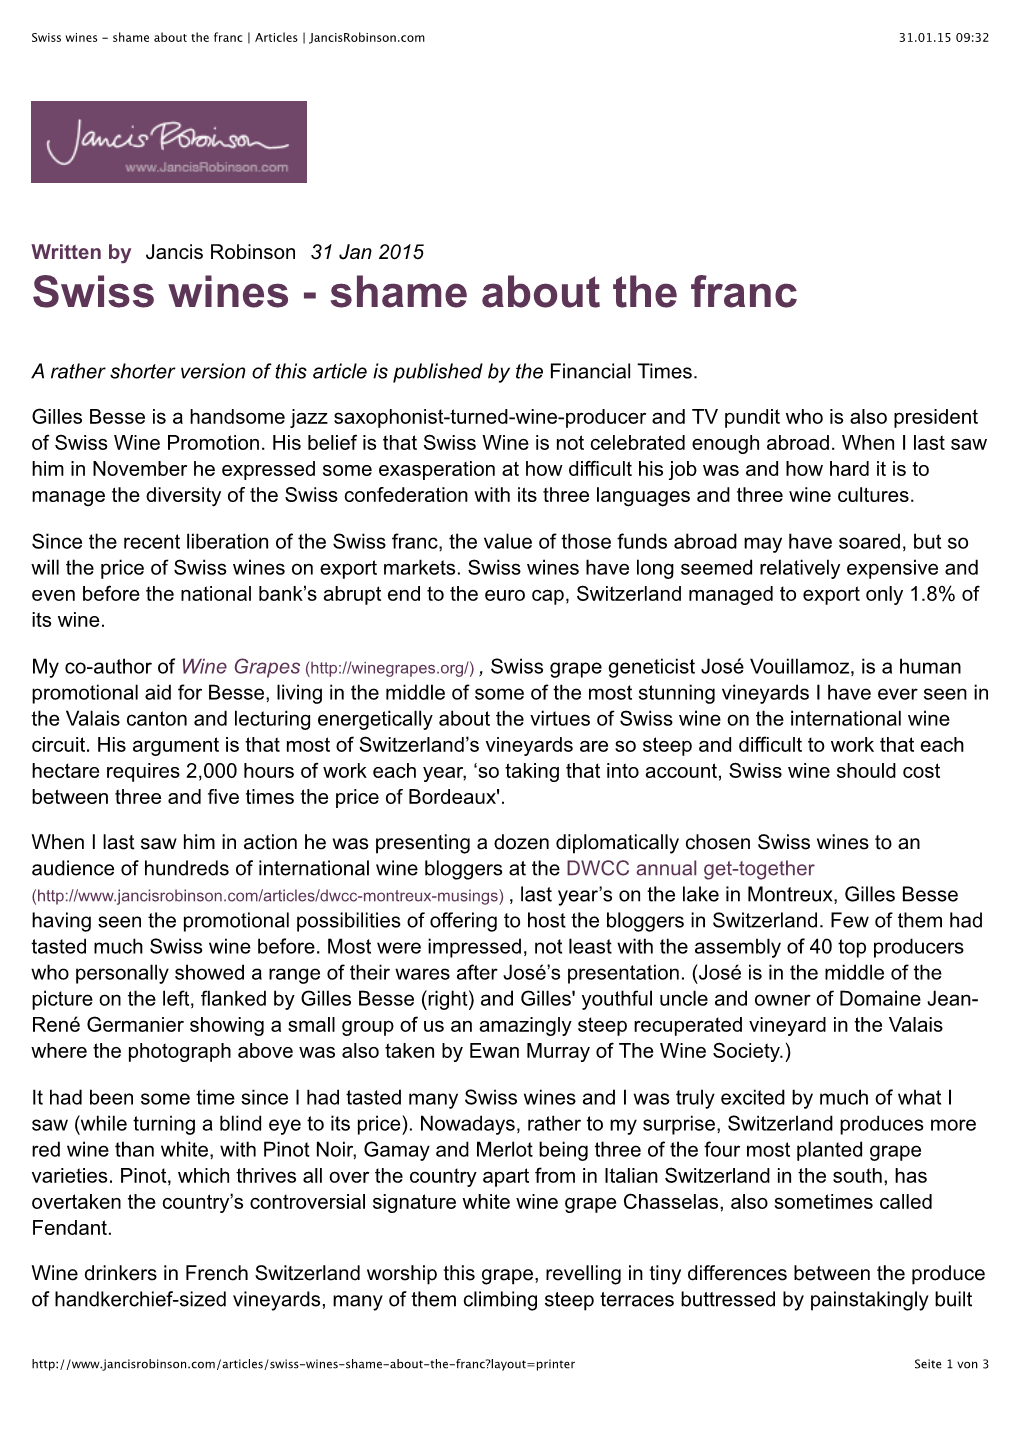 Swiss Wines - Shame About the Franc | Articles | Jancisrobinson.Com 31.01.15 09:32